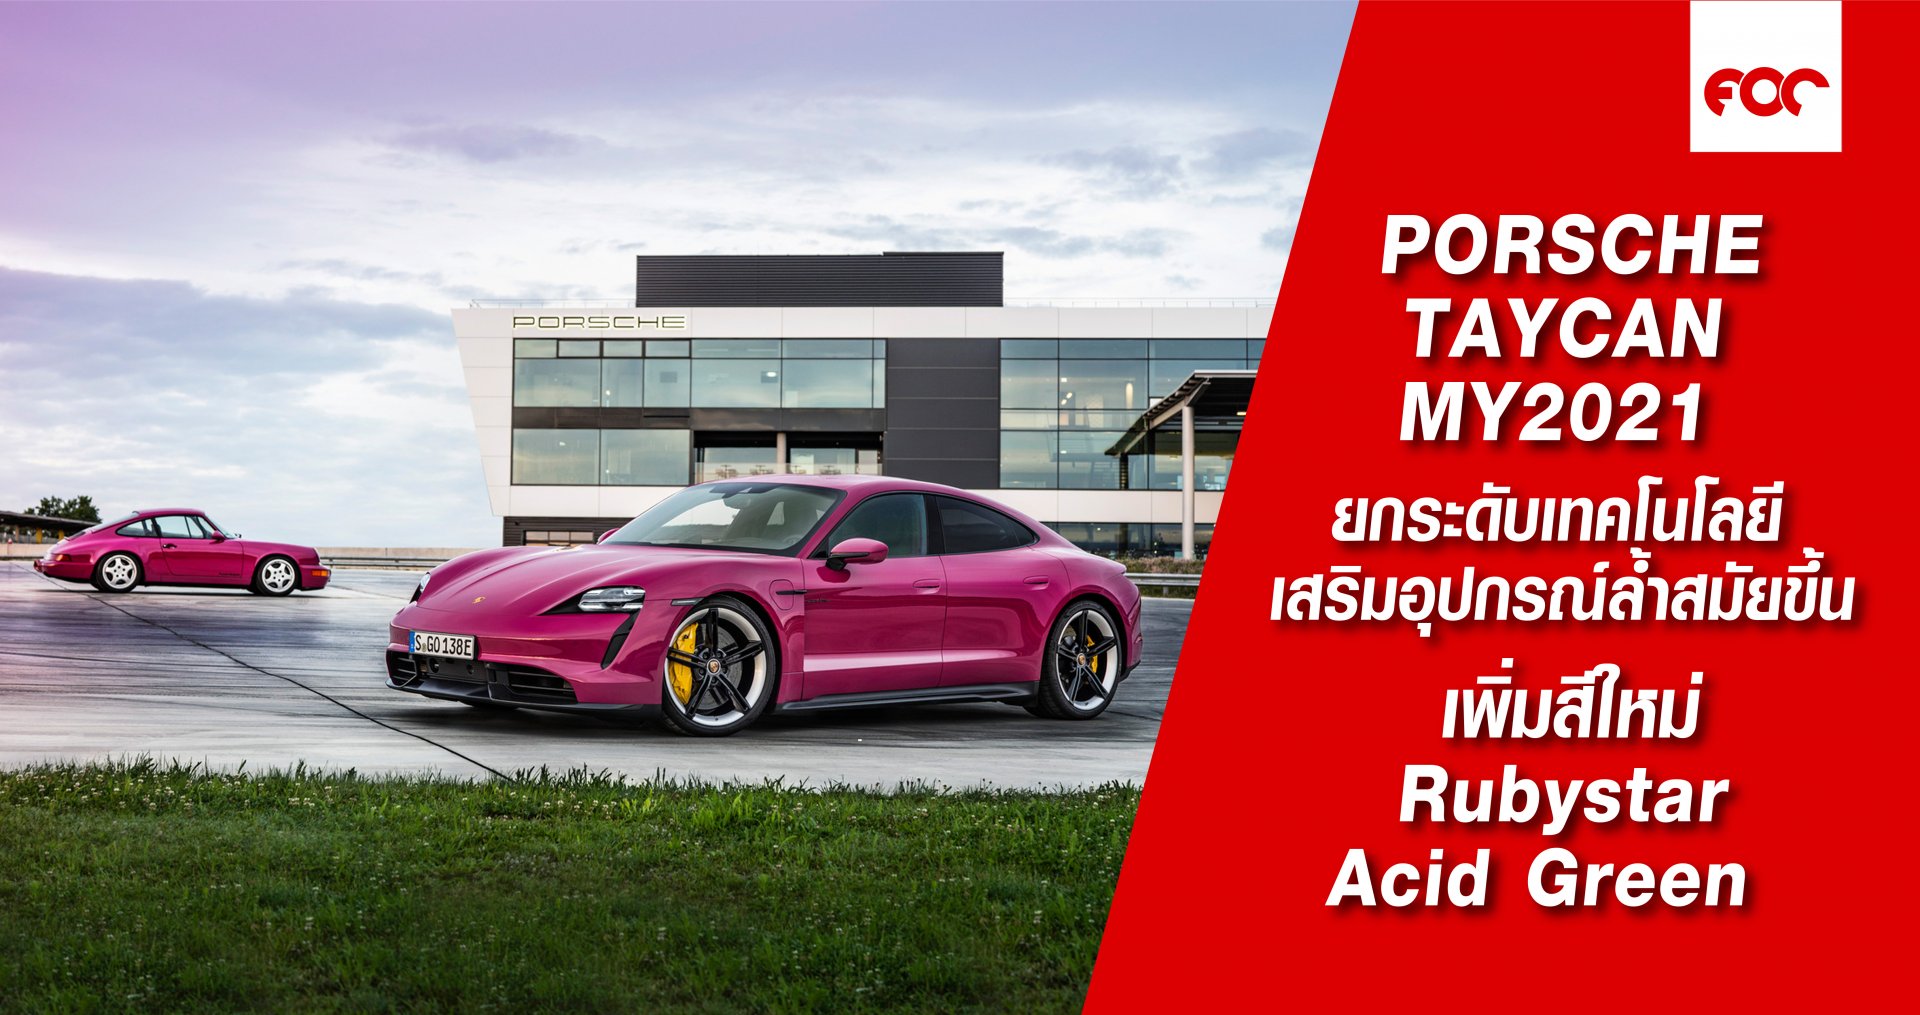 Porsche Taycan  MY 2021 ยกระดับเทคโนโลยี เสริมอุปกรณ์ล้ำสมัย เพิ่มสีใหม่ Rubystar , Acid Green 